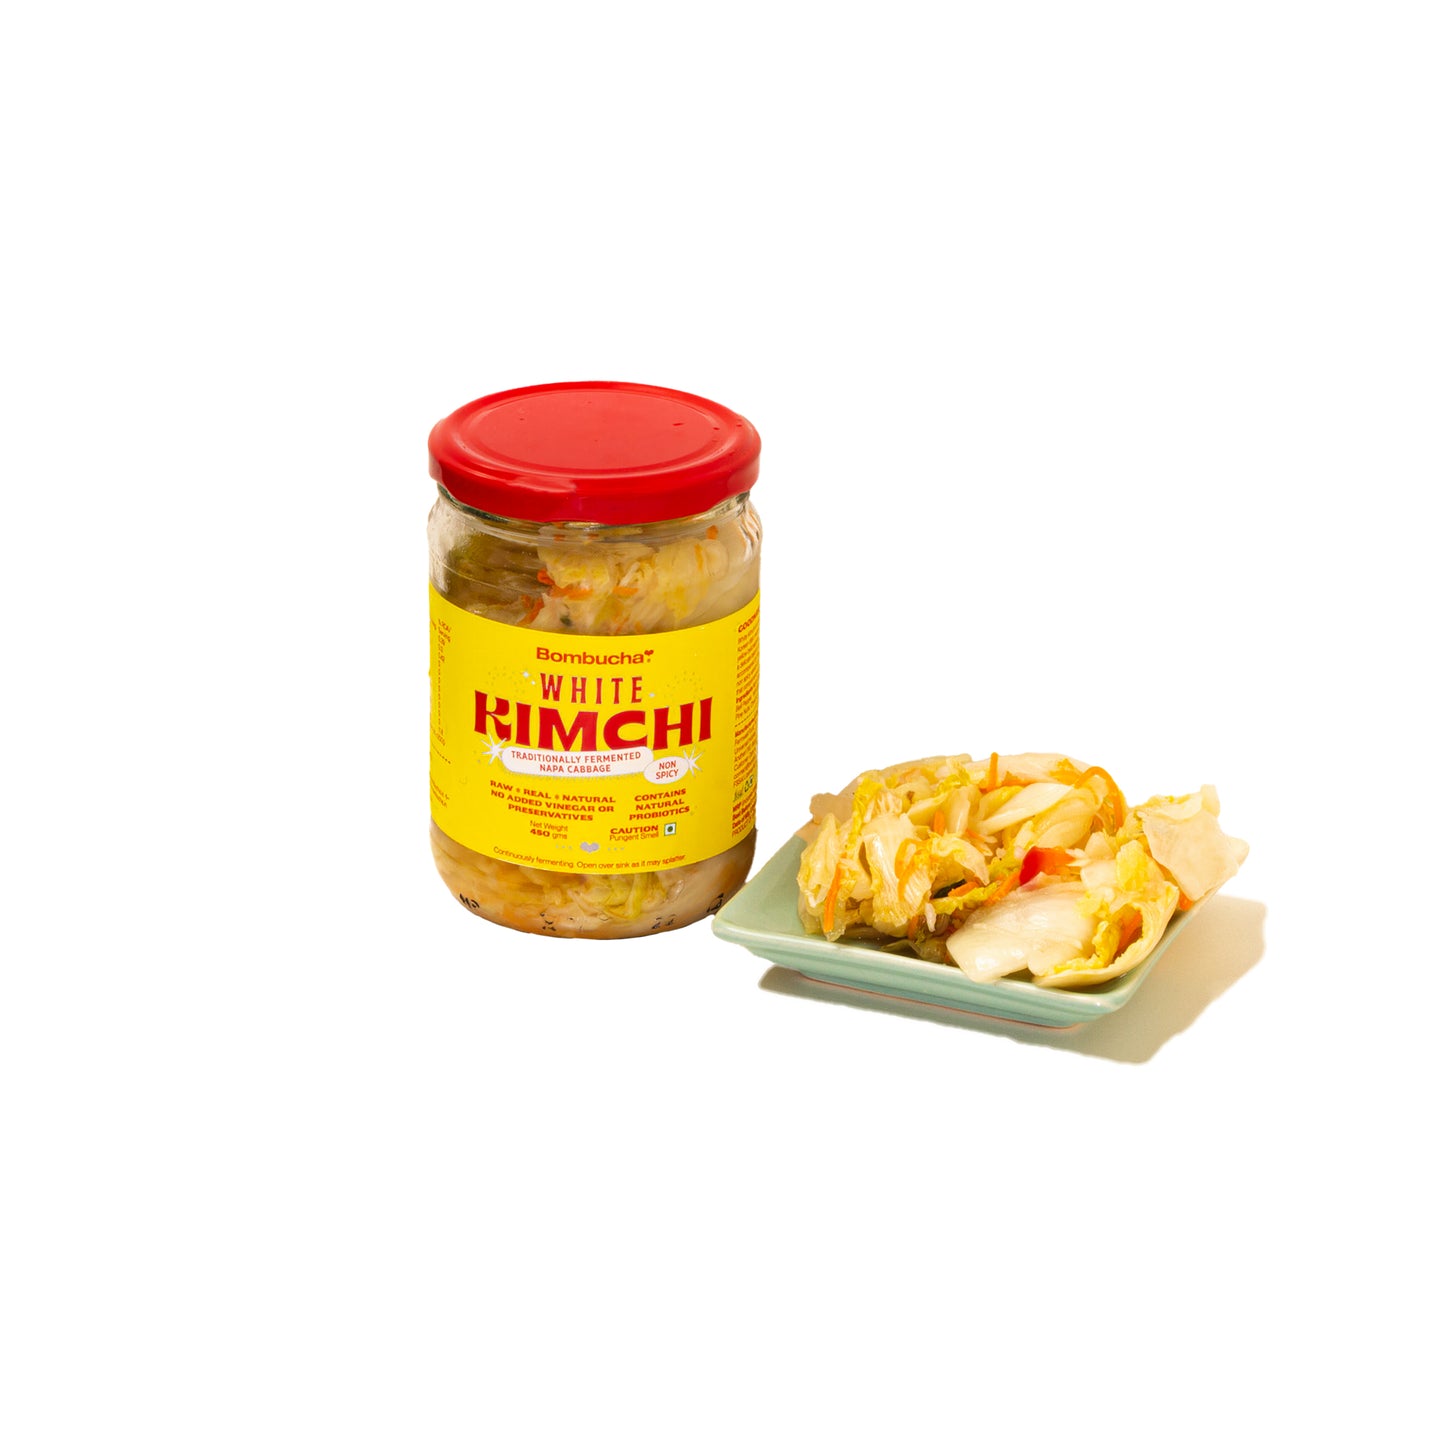 Kimchi - White (Non Spicy) 450gm (BL)